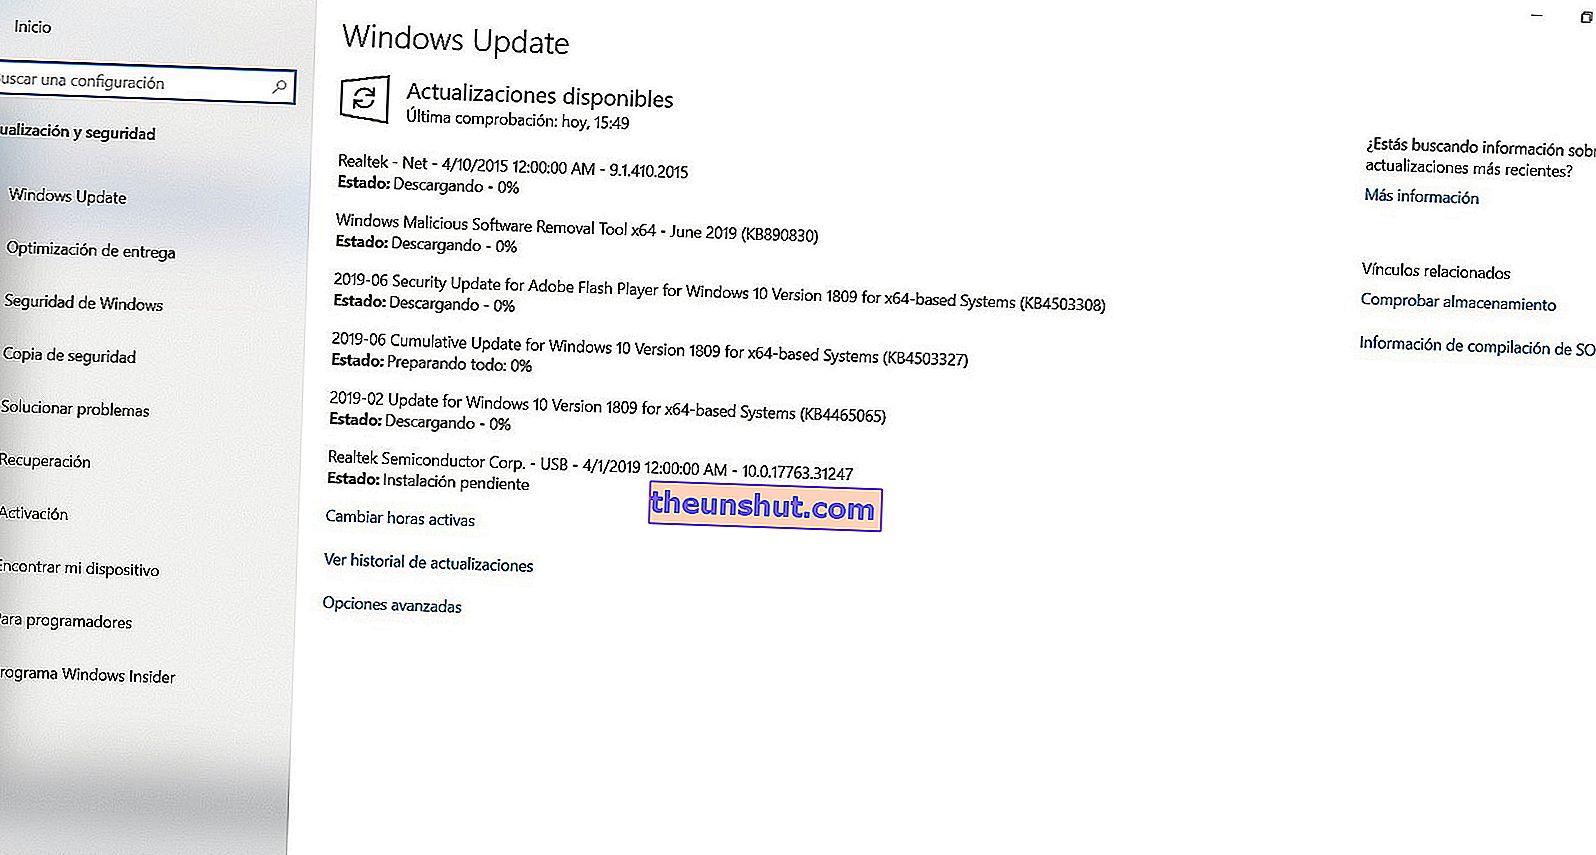 Opdater bundkortdrivere med Windows Update 2